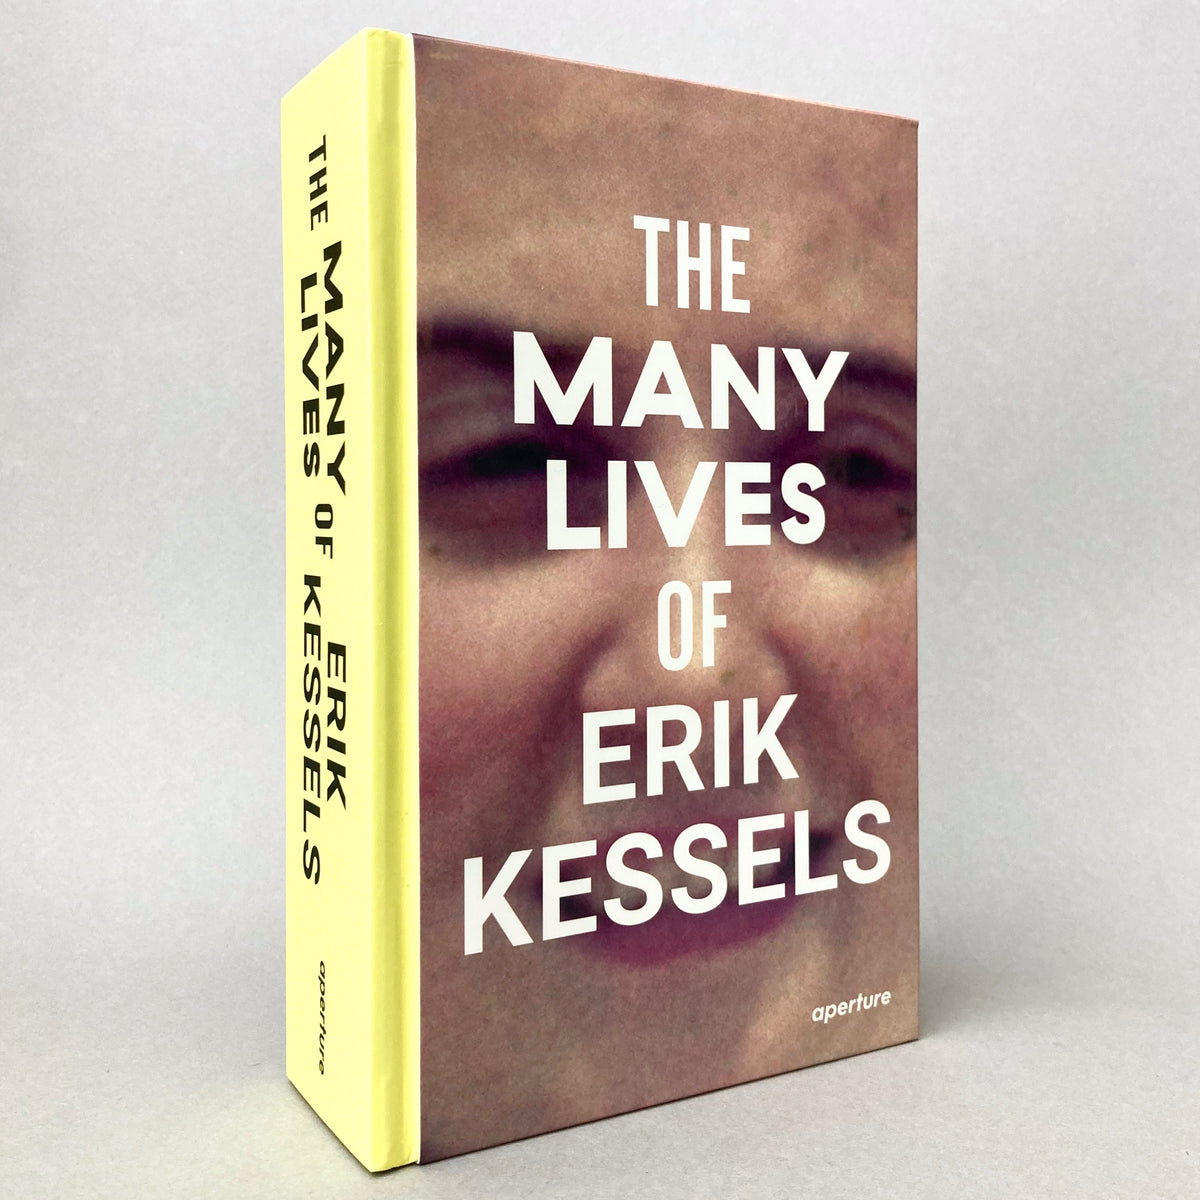 The Many Lives of Erik Kessels